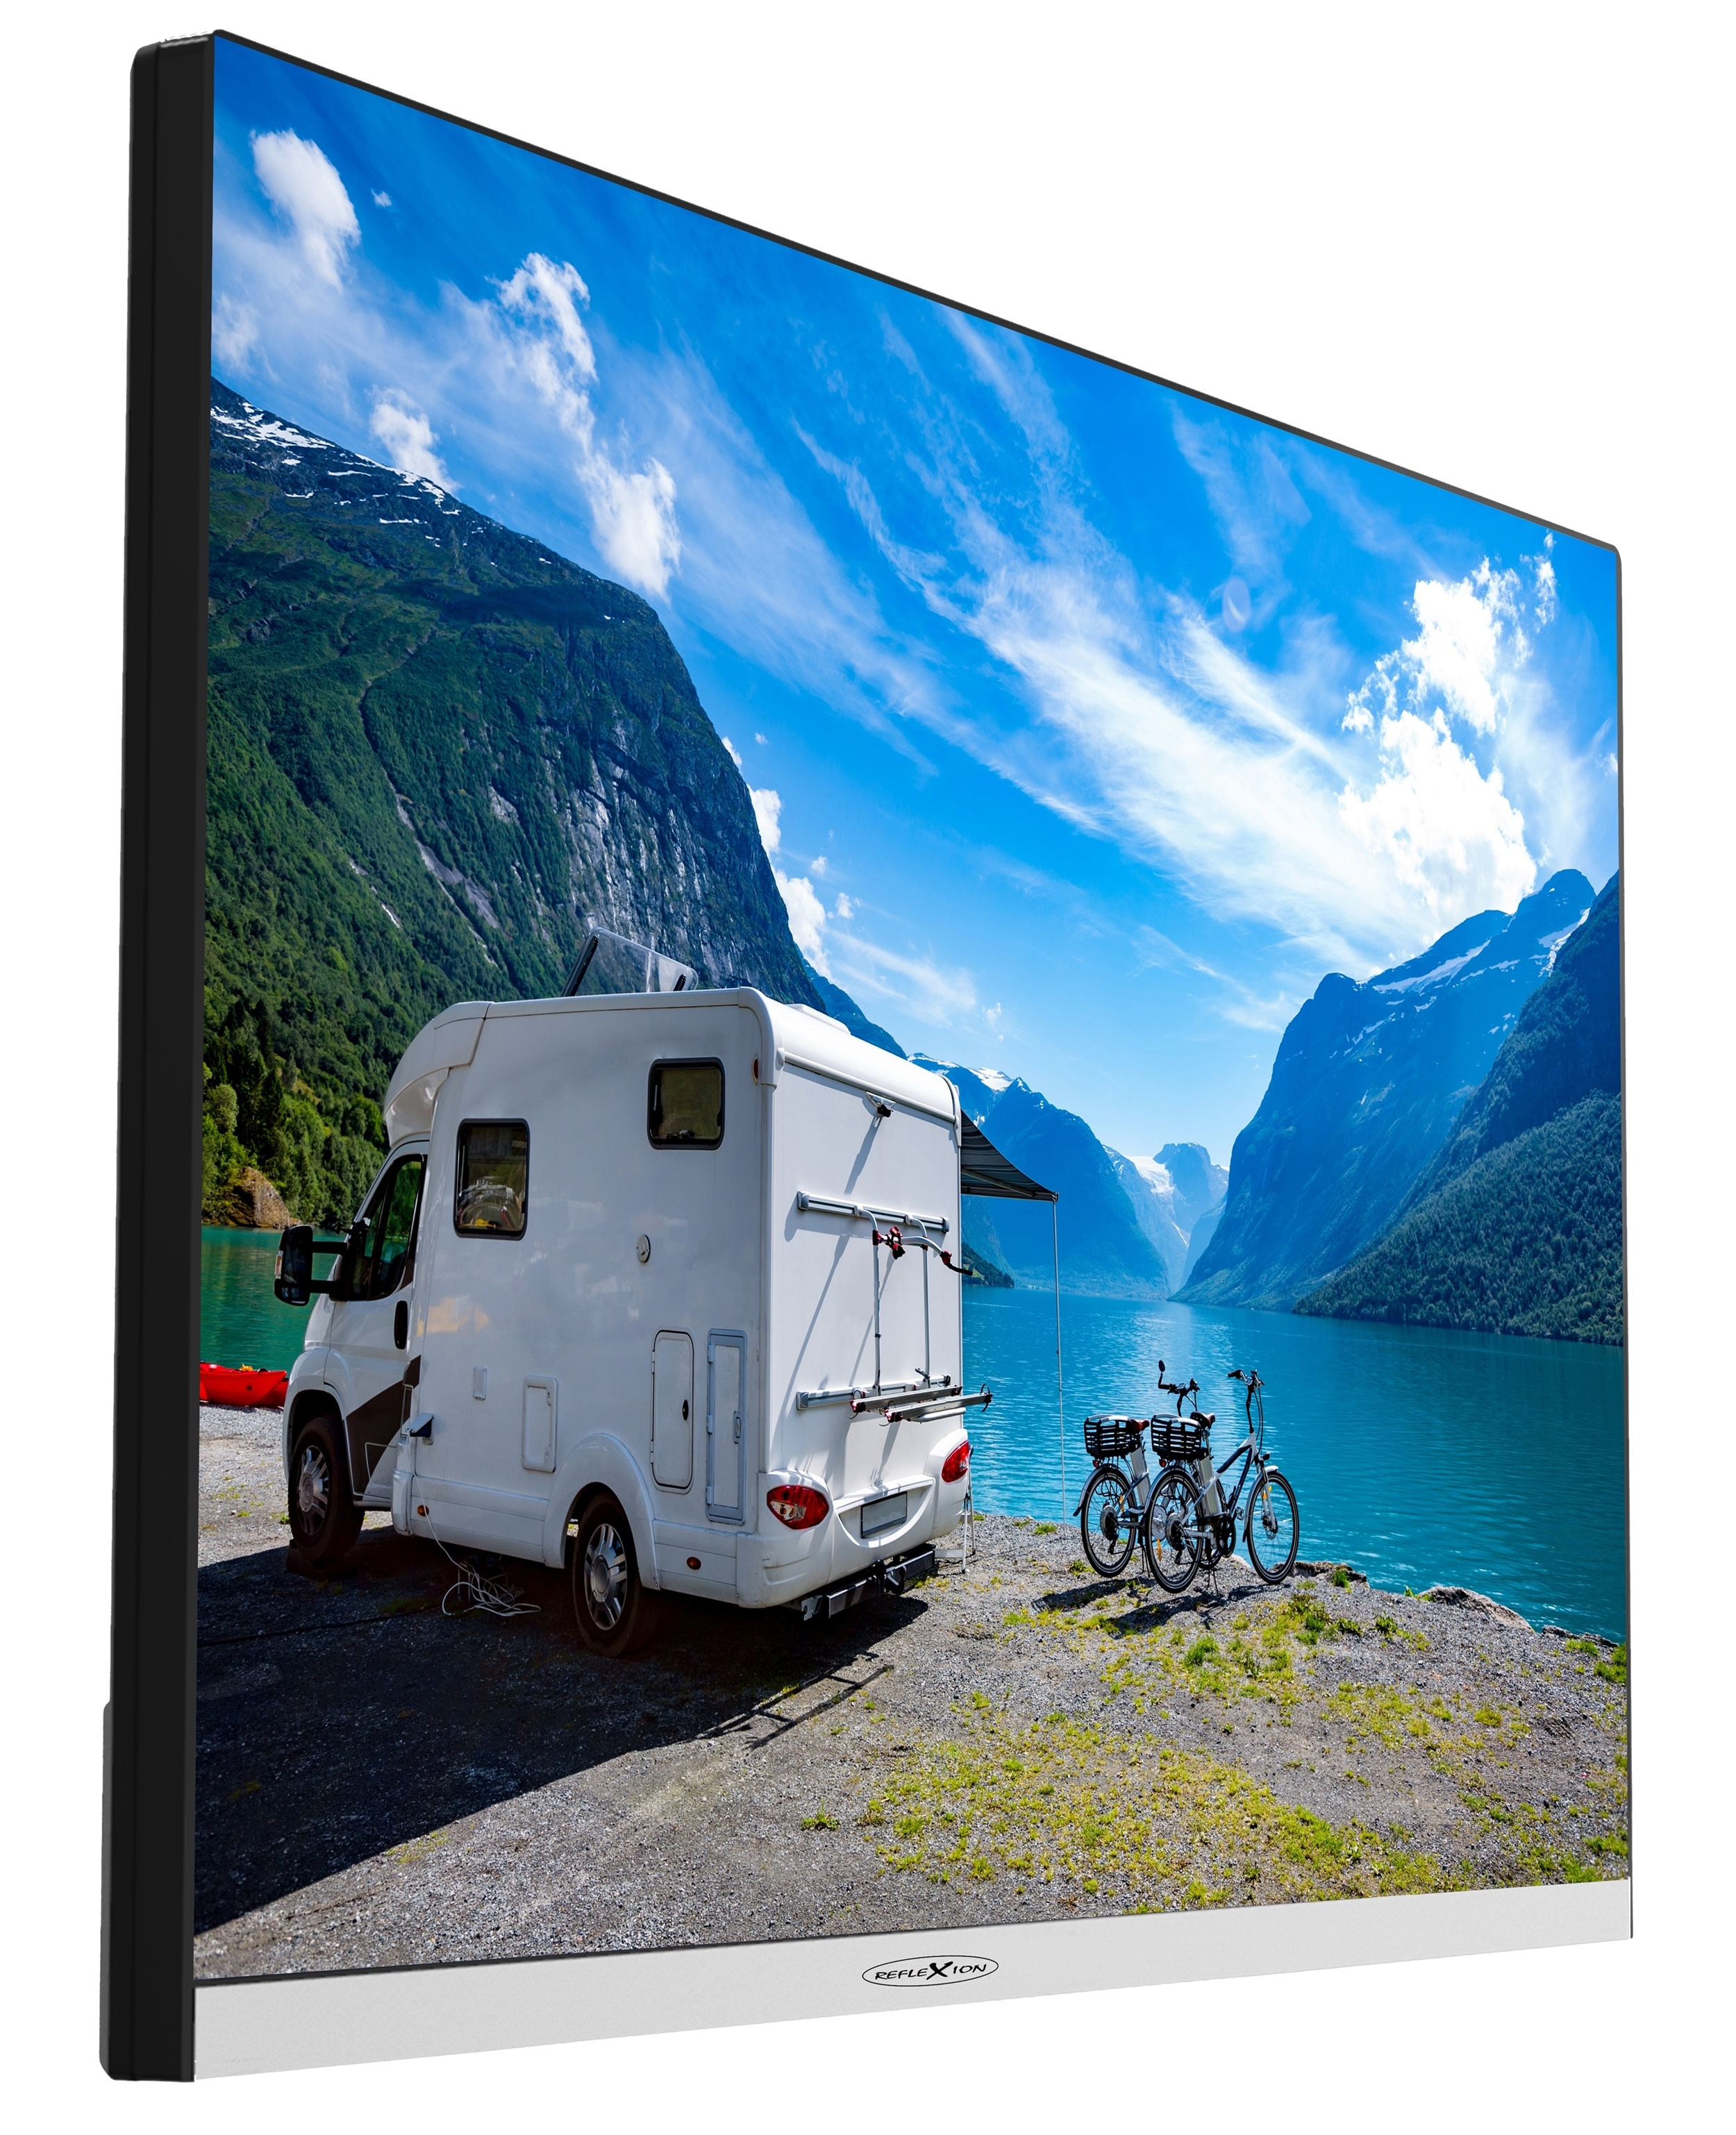 SMART TV) 55 LEDX24i+ (Flat, REFLEXION LED / Full-HD, TV 22 Zoll cm,